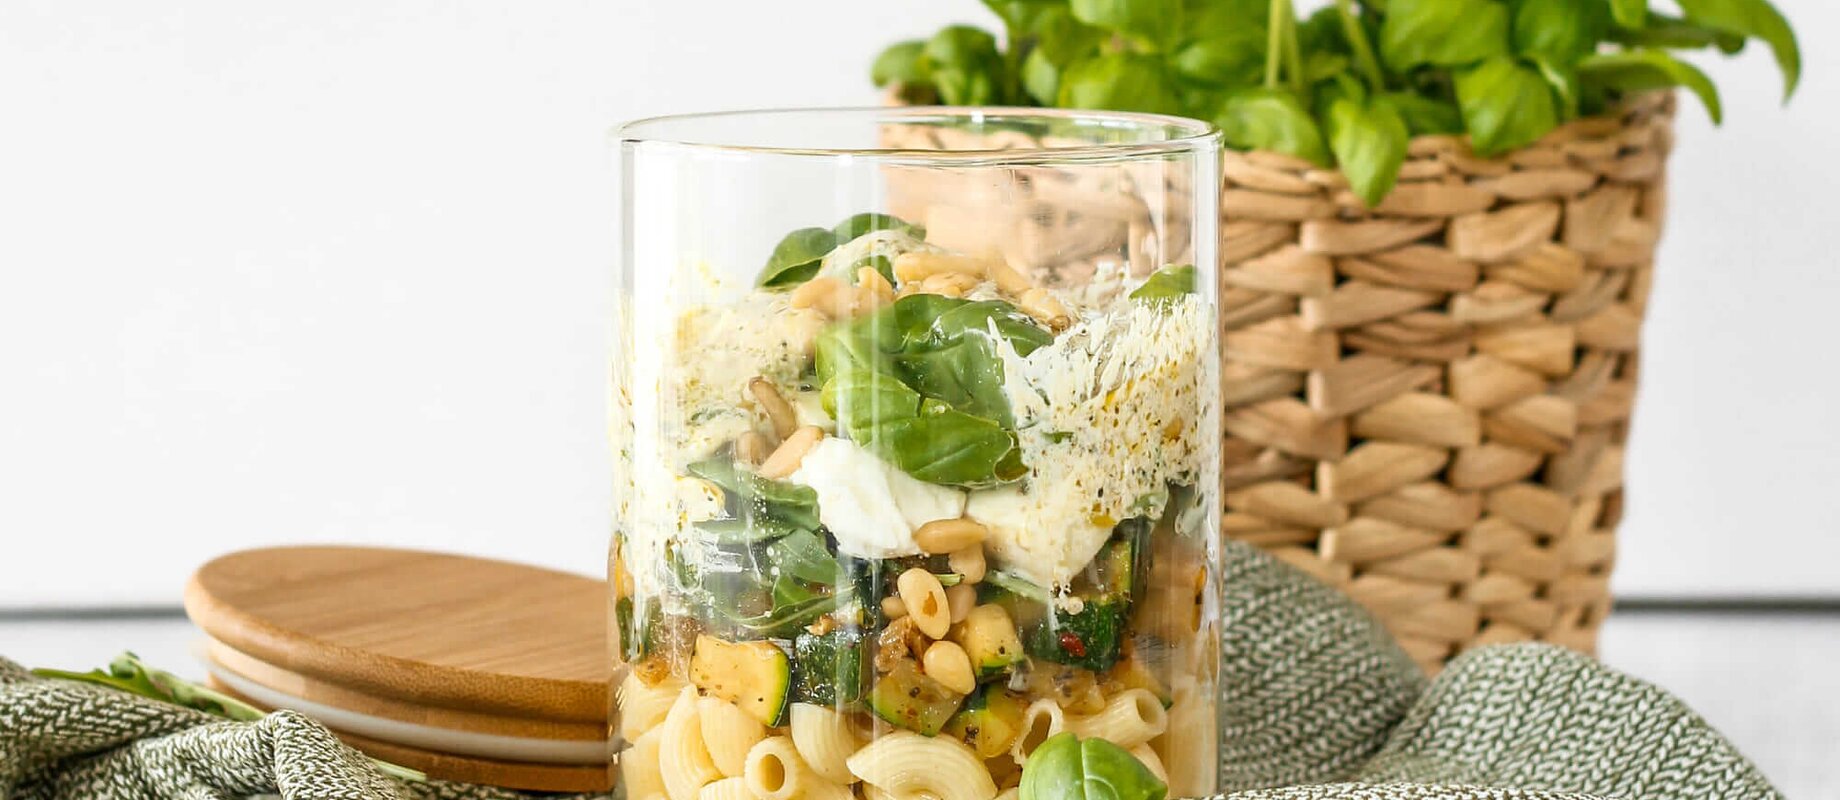 Rezept Cornetti-Schichtsalat mit Zucchini und Pesto